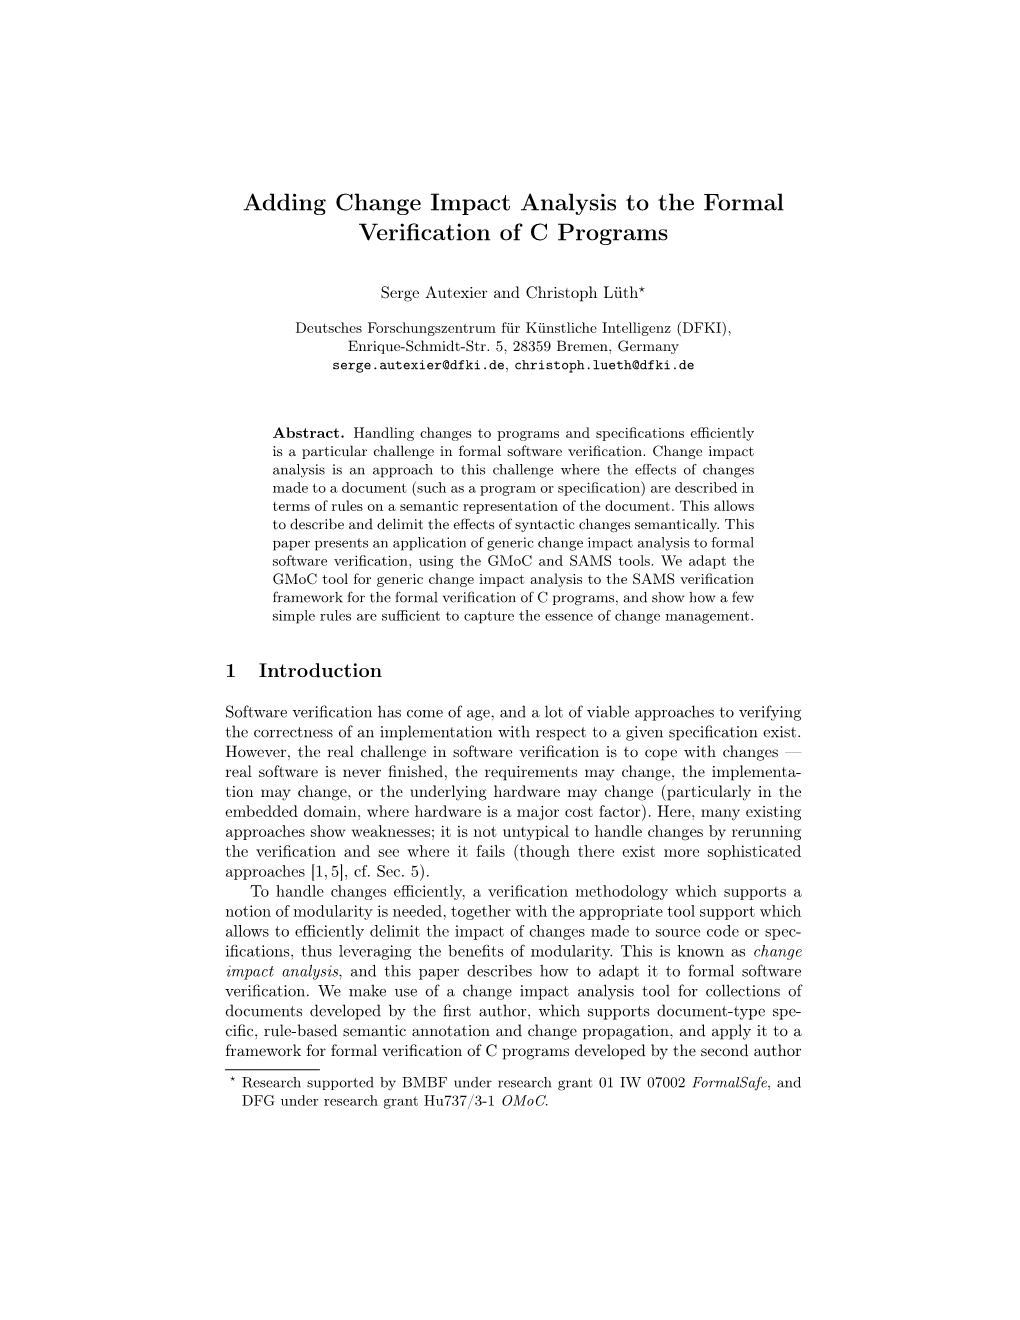 Adding Change Impact Analysis to the Formal Verification of C Programs